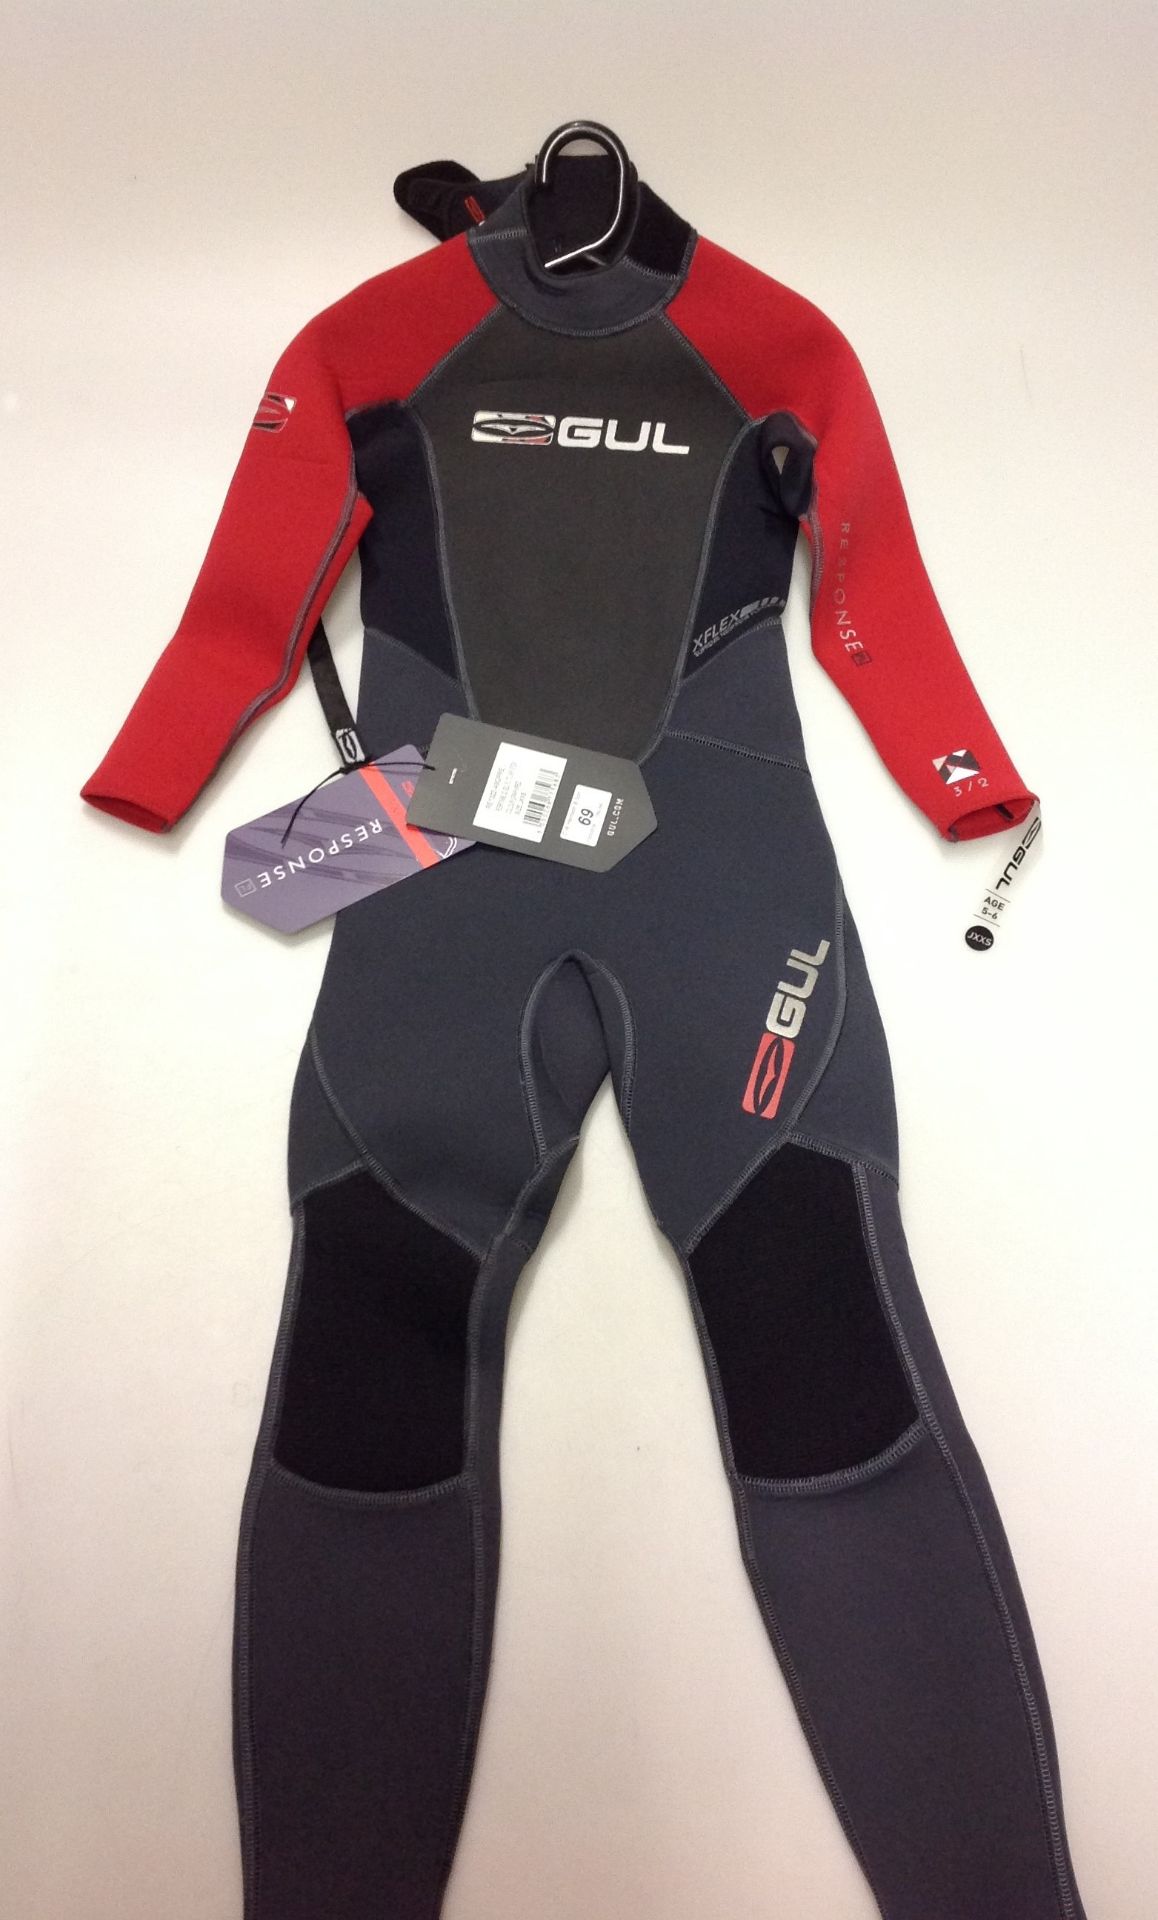 Gul Response 32 SDL FL wetsuit - size JXXS